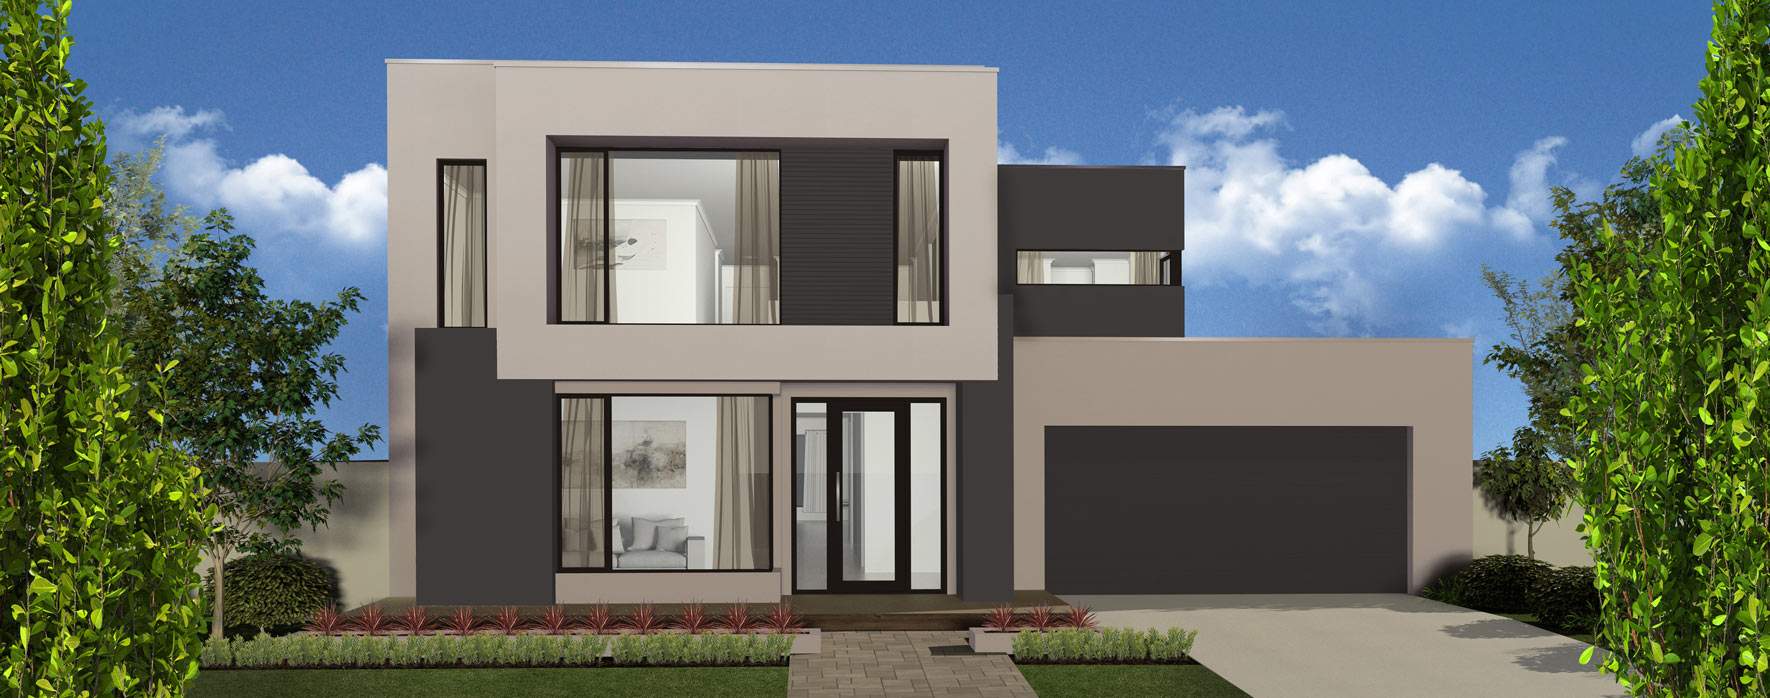 toorak-47-double-storey-house-design-luxe-facade